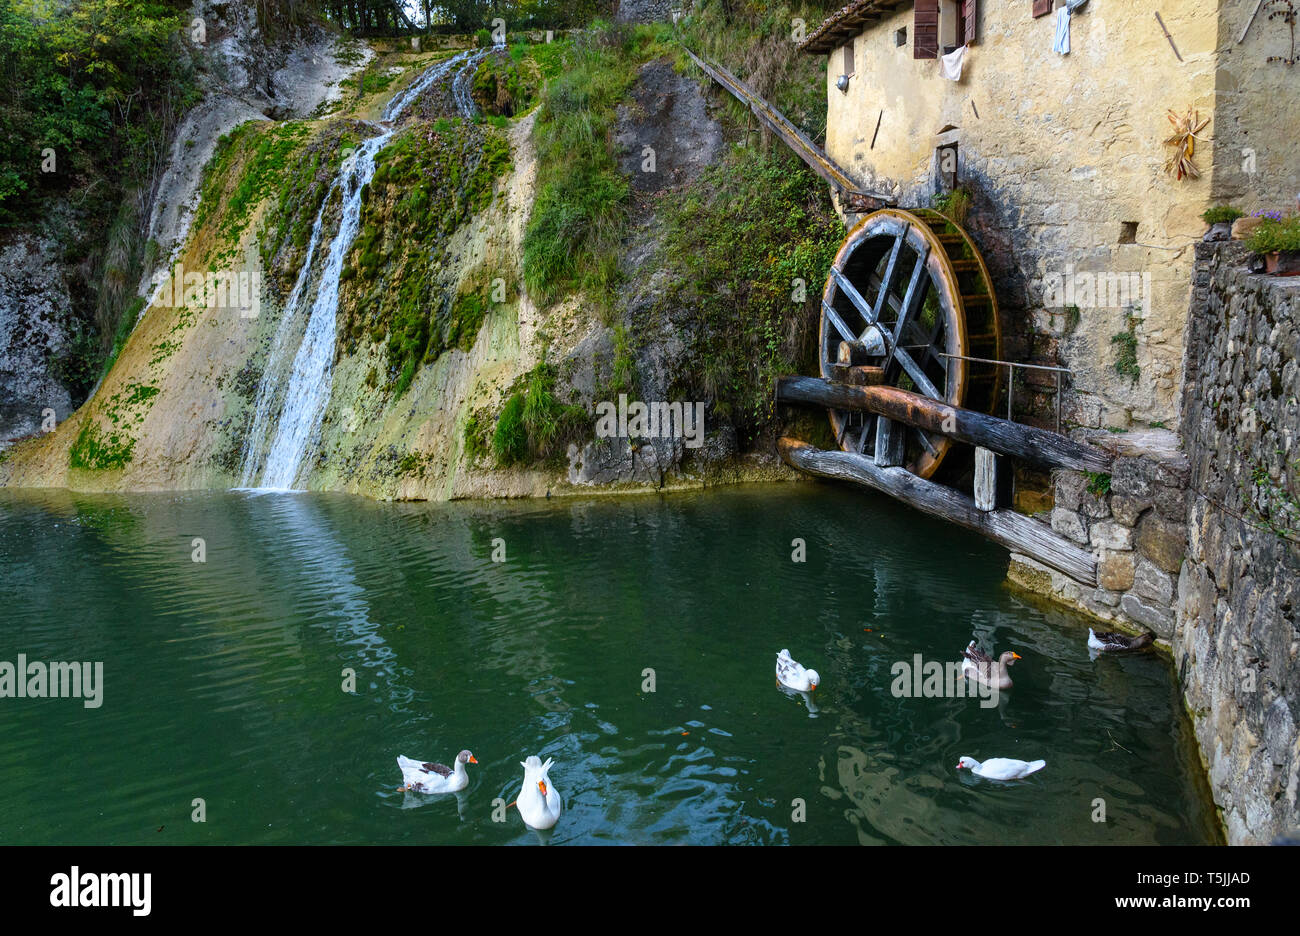 Ancient watermill wheel, Molinetto della Croda in Lierza valley. Refrontolo. Province of Treviso. Italy Stock Photo